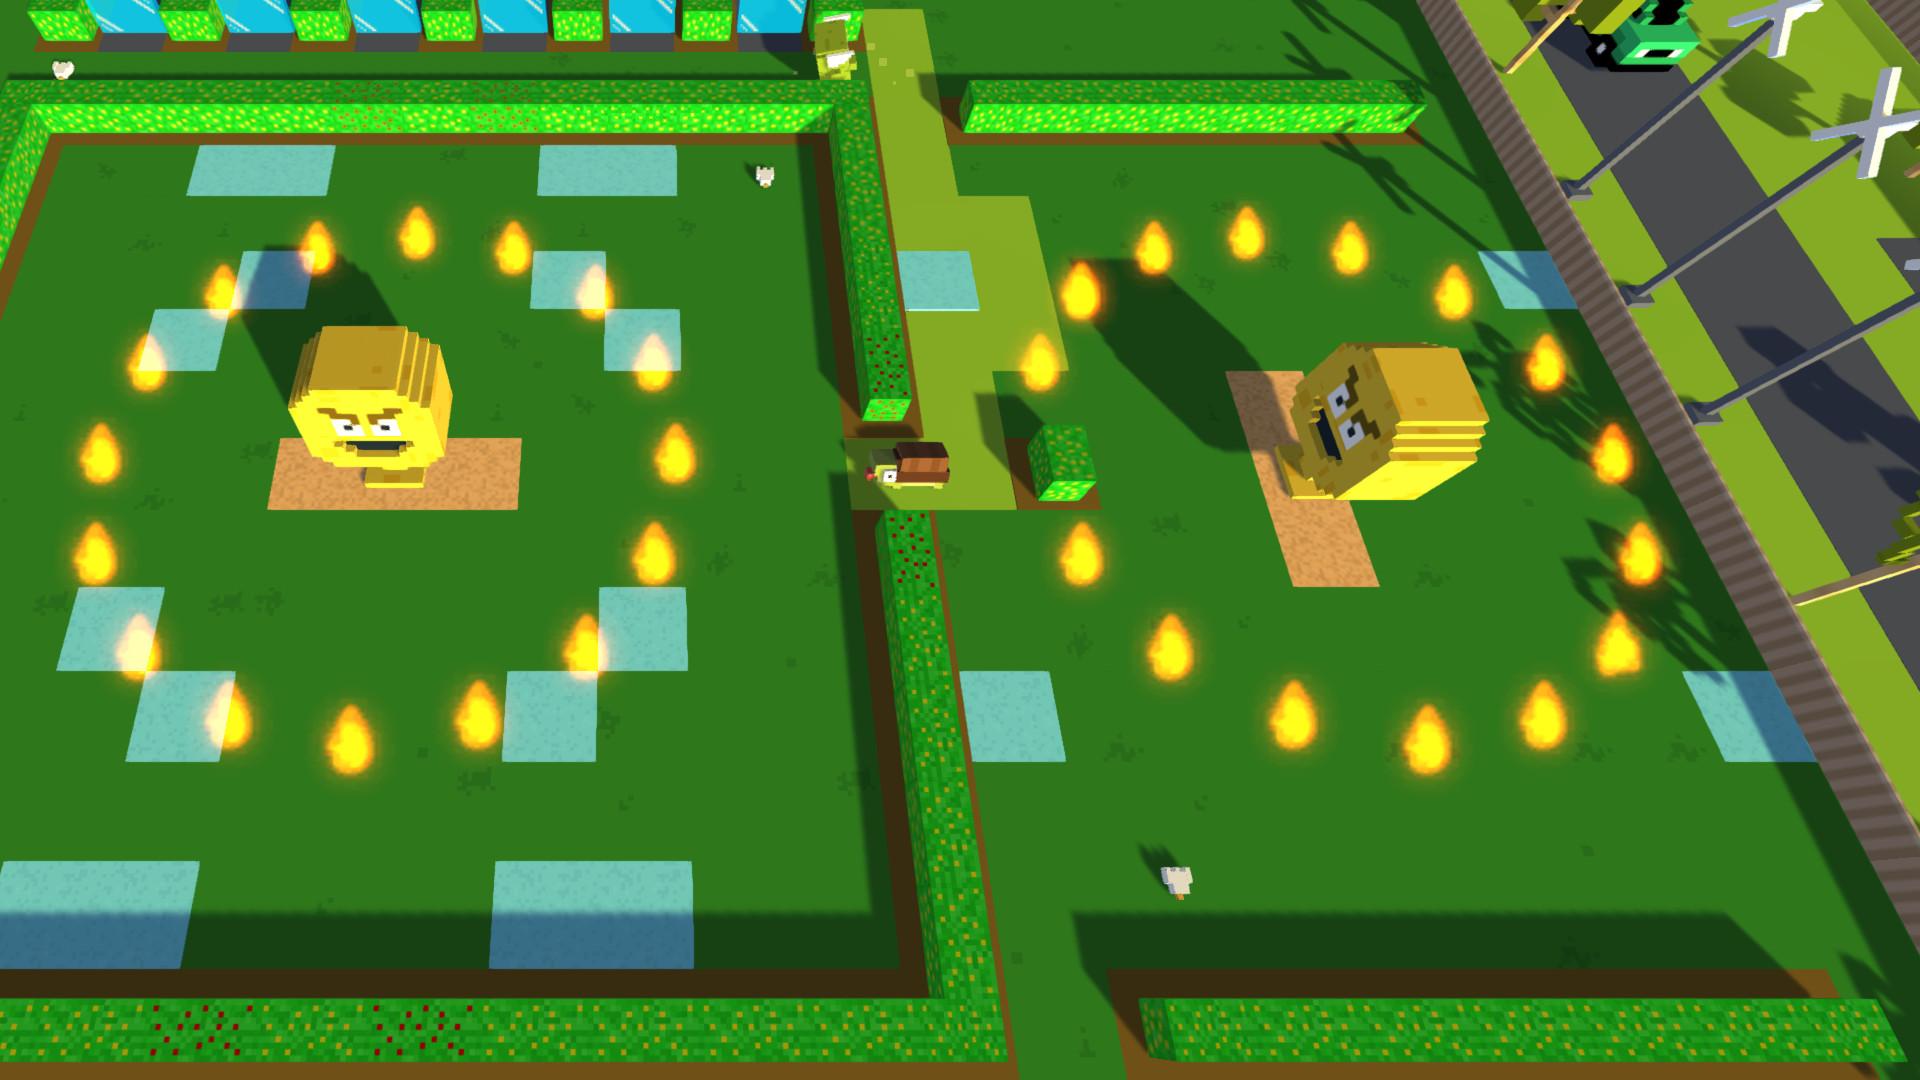 Screenshot №6 from game Grass Cutter - Mutated Lawns